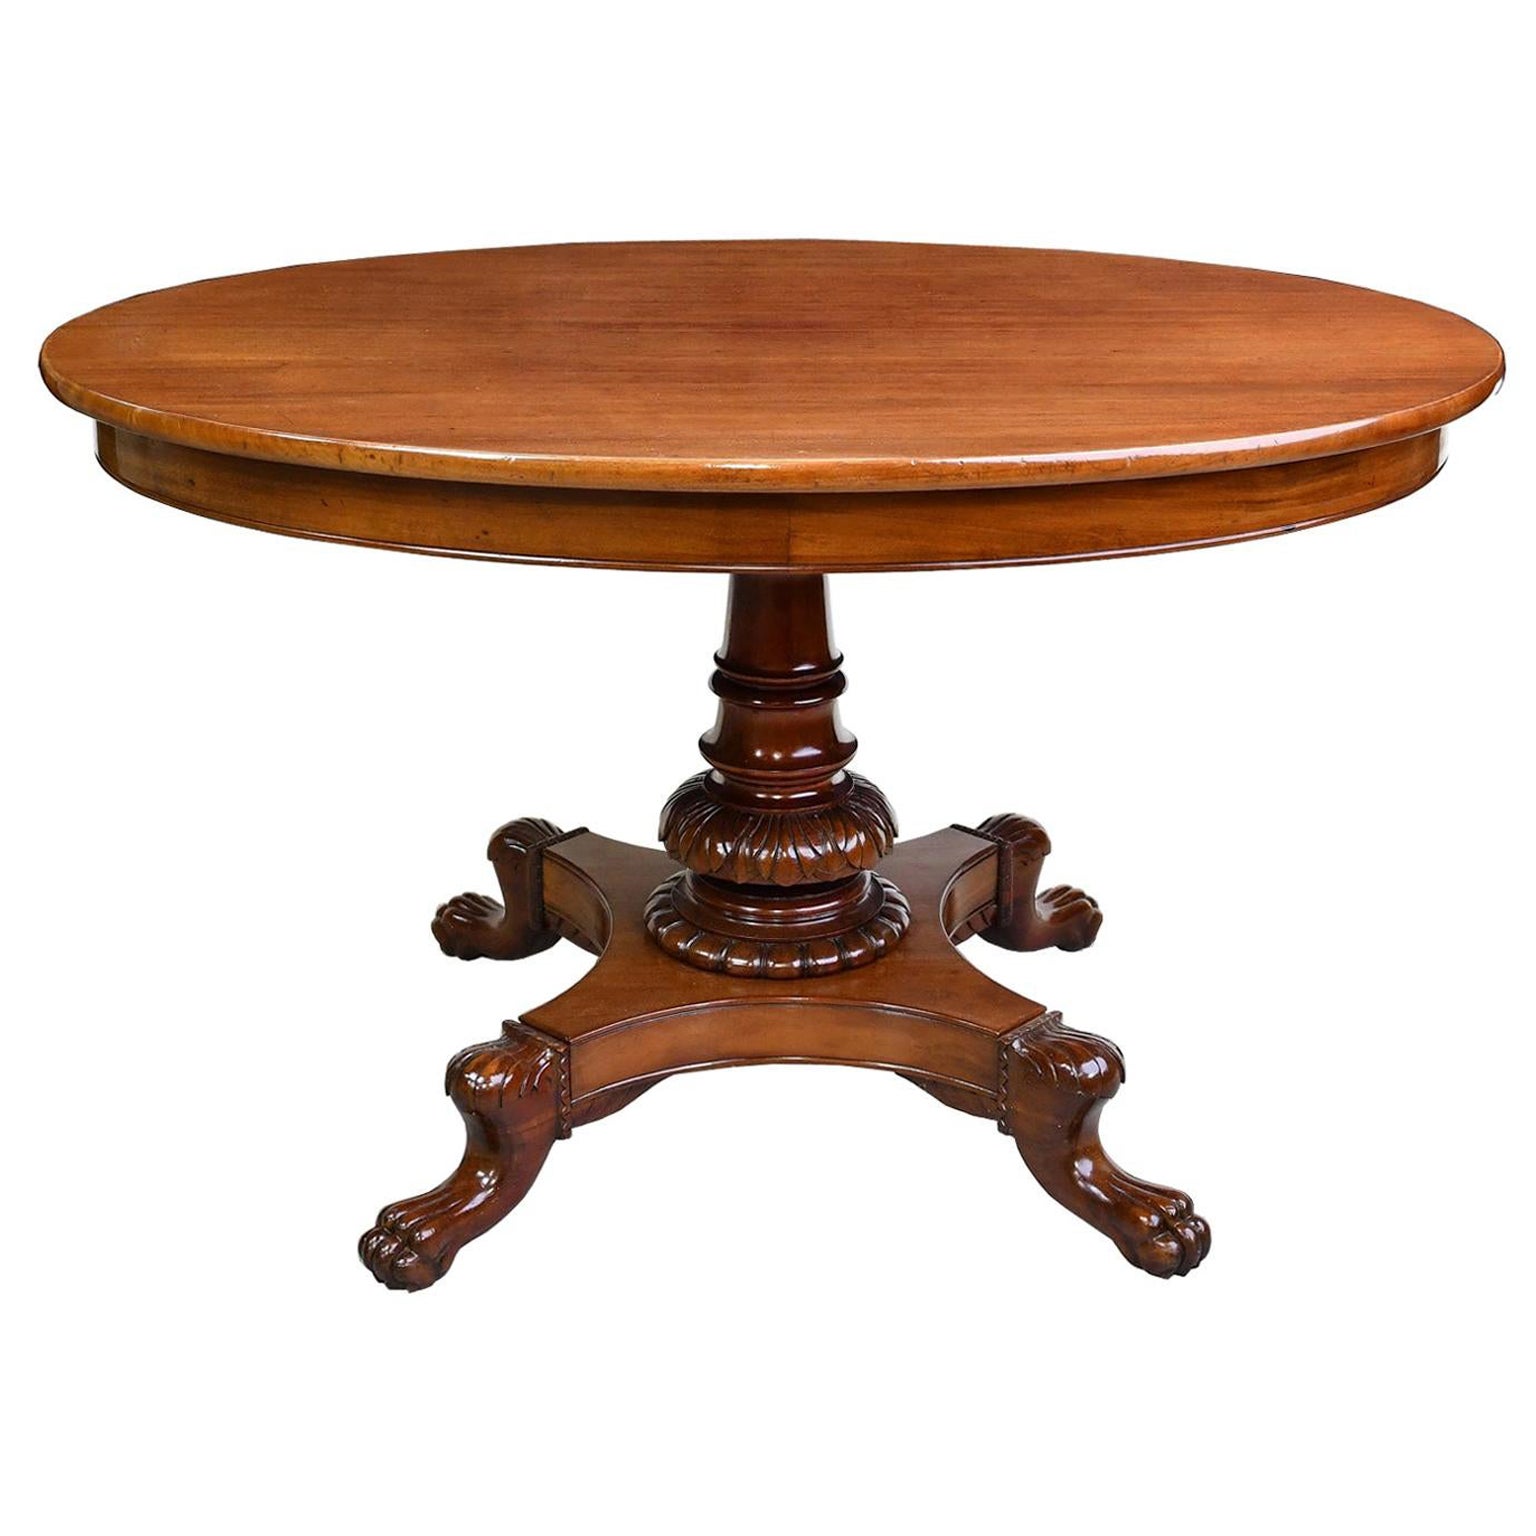 Christian VIII Empire Oval Pedestal Tea Table in Mahogany, Denmark, circa 1835 For Sale